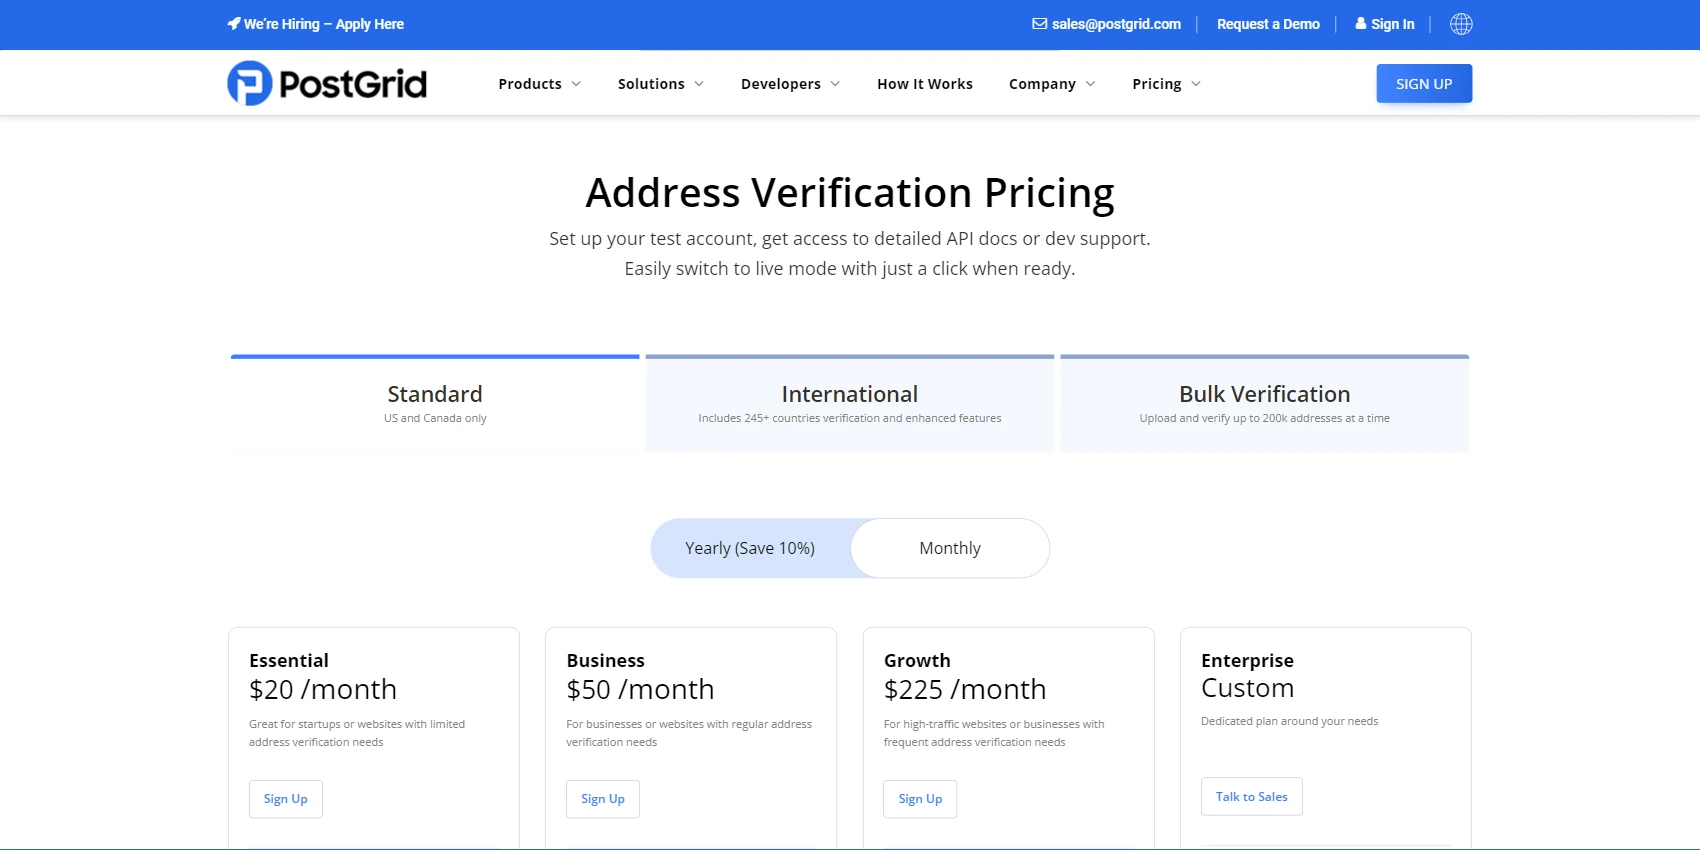 PostGrid Address Verification Pricing